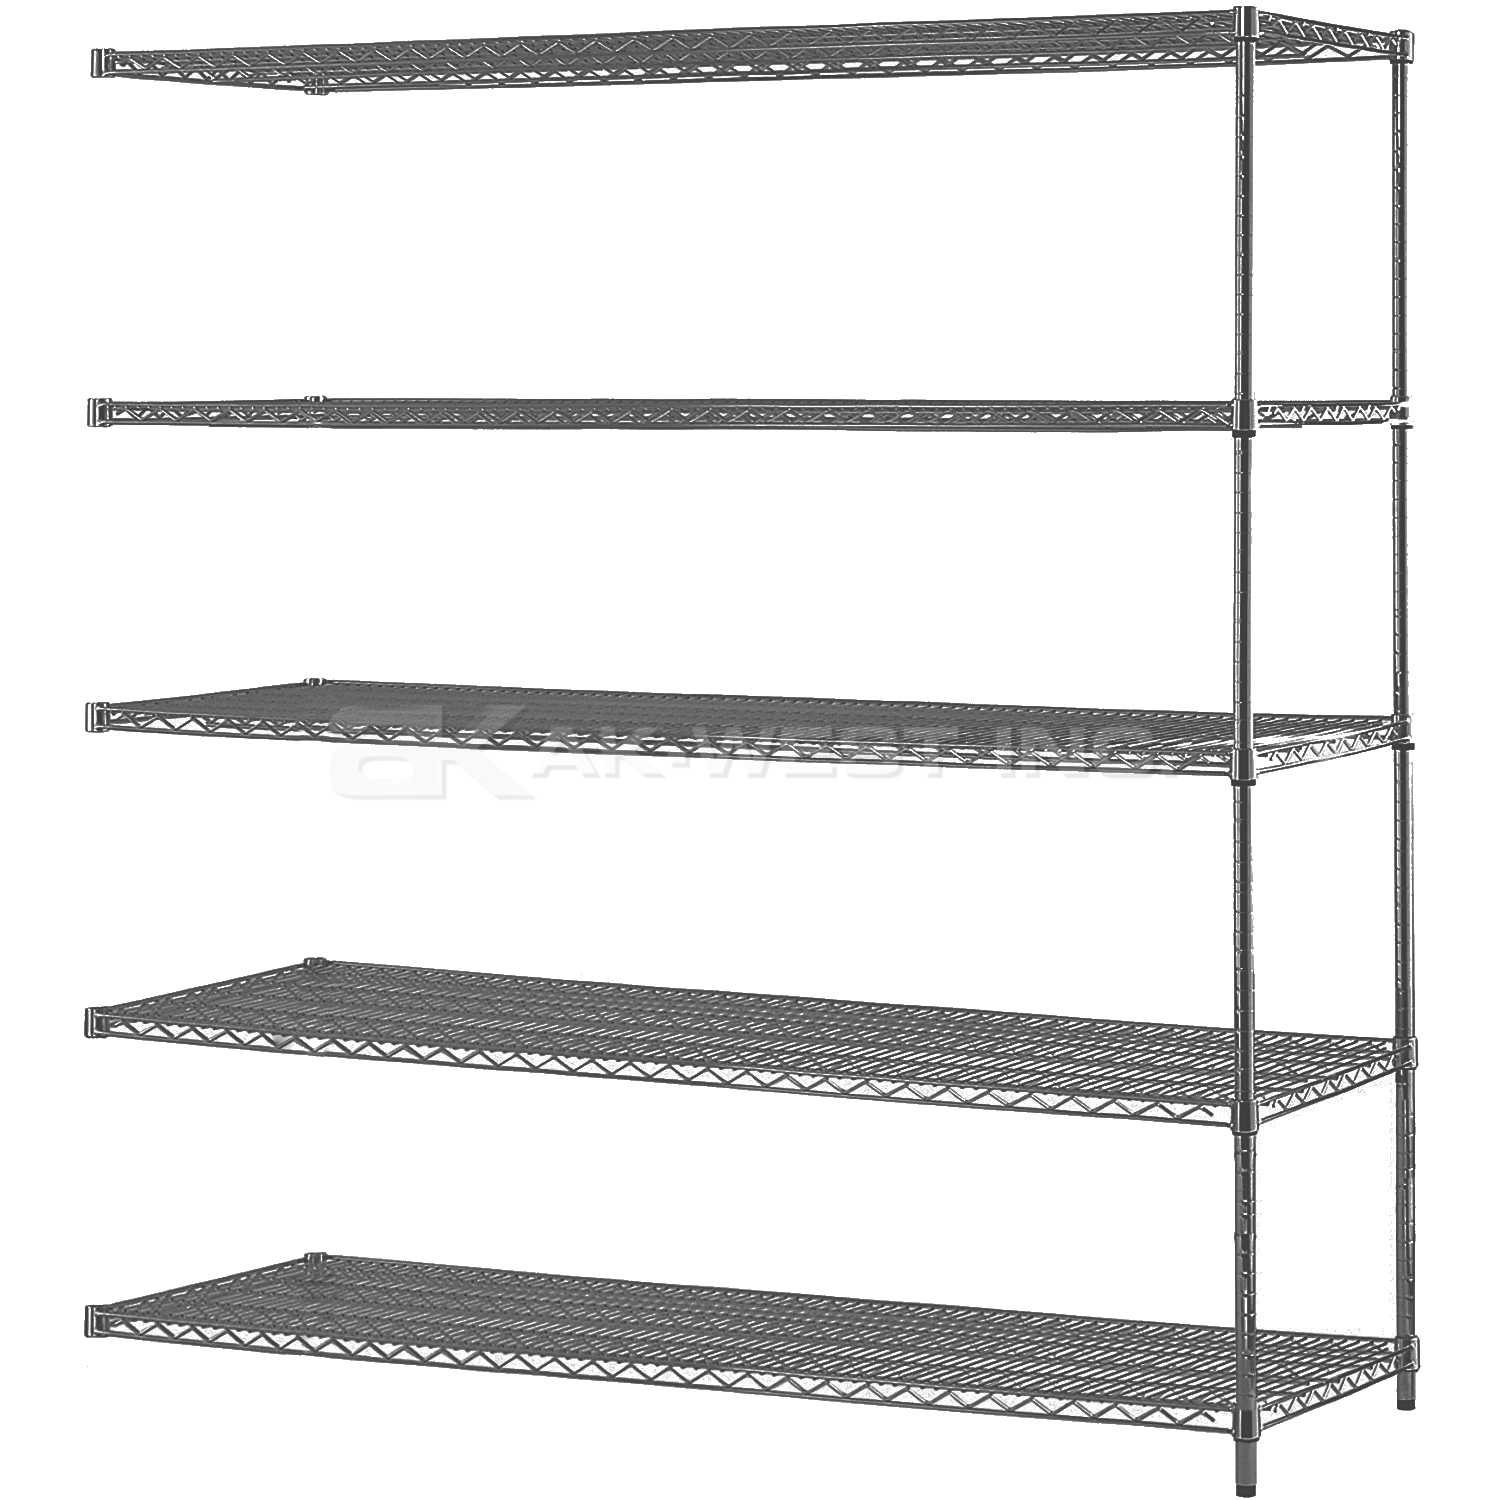 Grey, 18"D x 60"W x 74"H, 6 Shelf, Wire Shelving Adder Kit